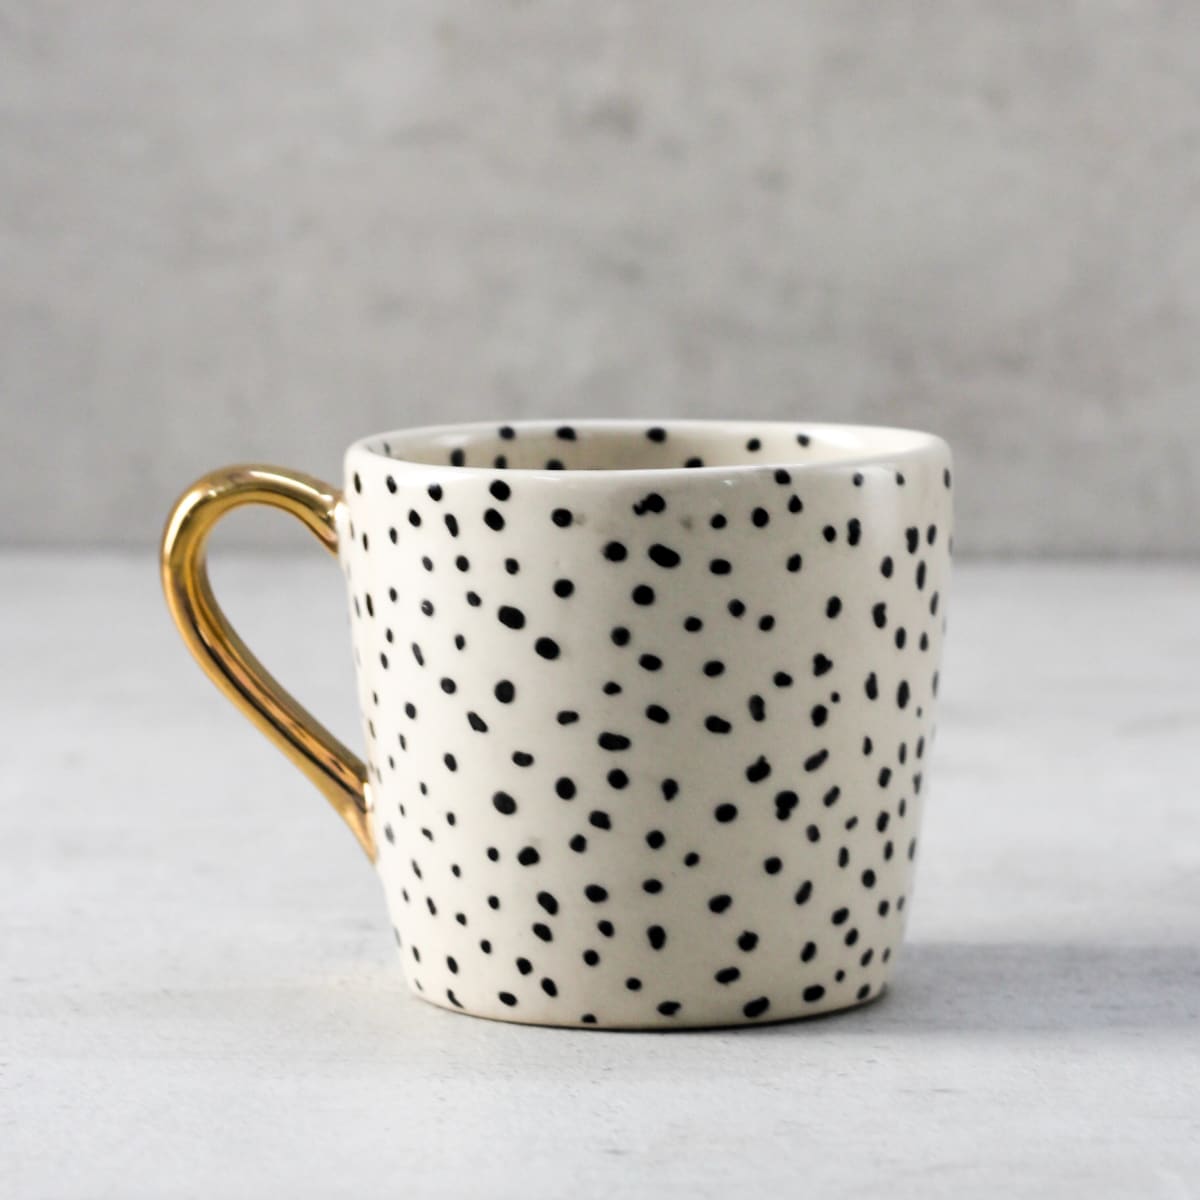 Charlotte Polka Dot Handmade Ceramic Mug with Golden Handle - Set of 2 - Home Artisan